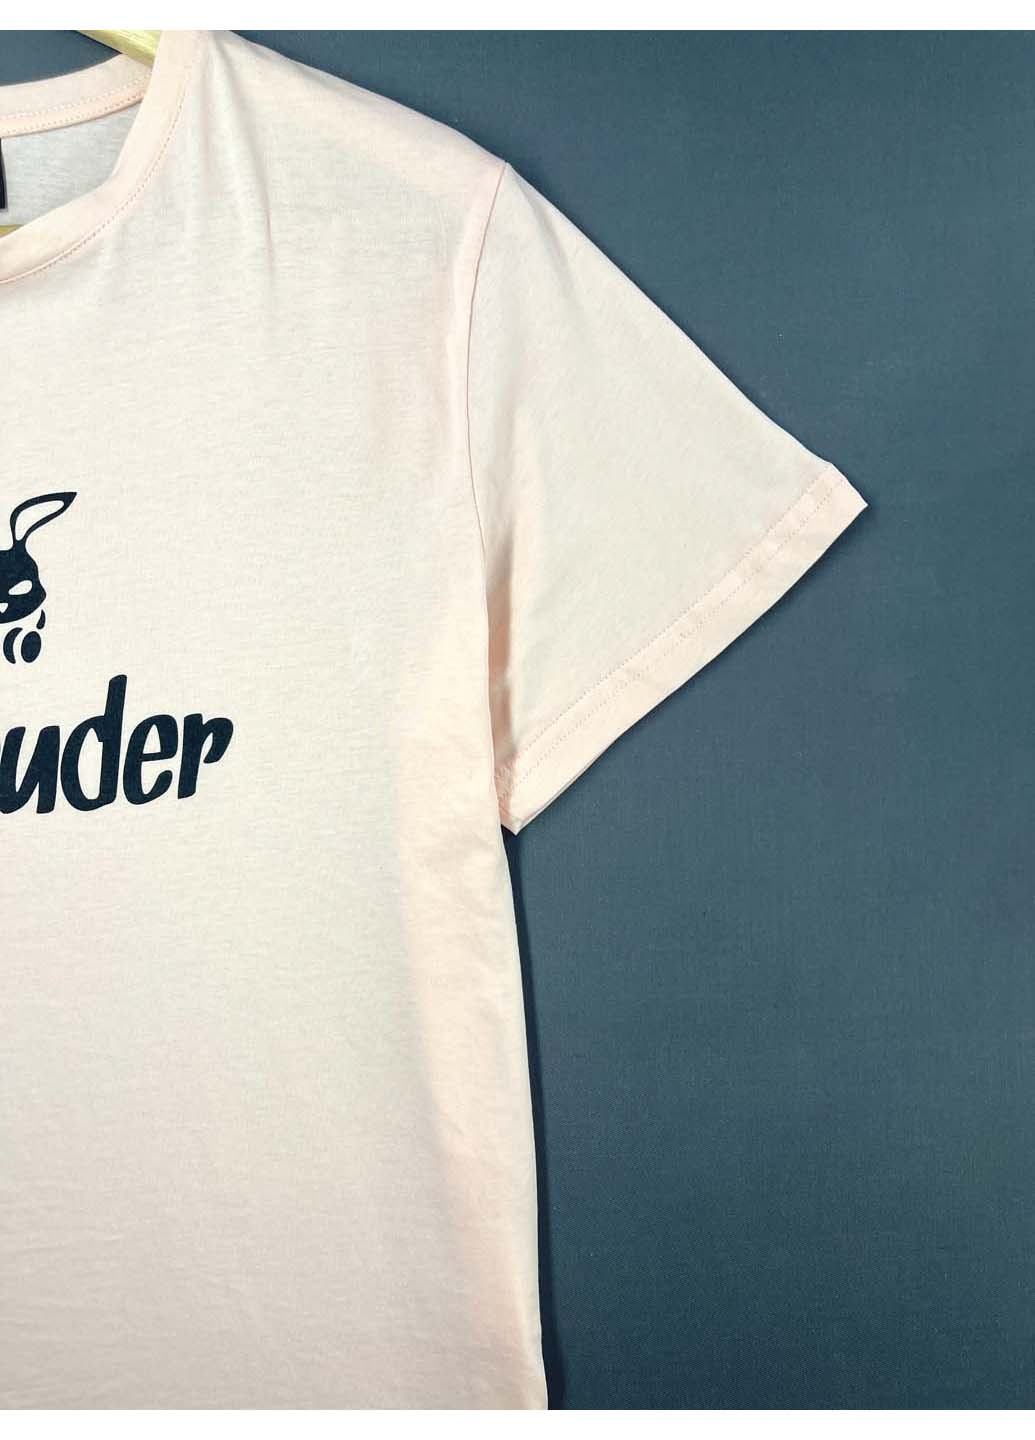 Пудрова футболка Intruder